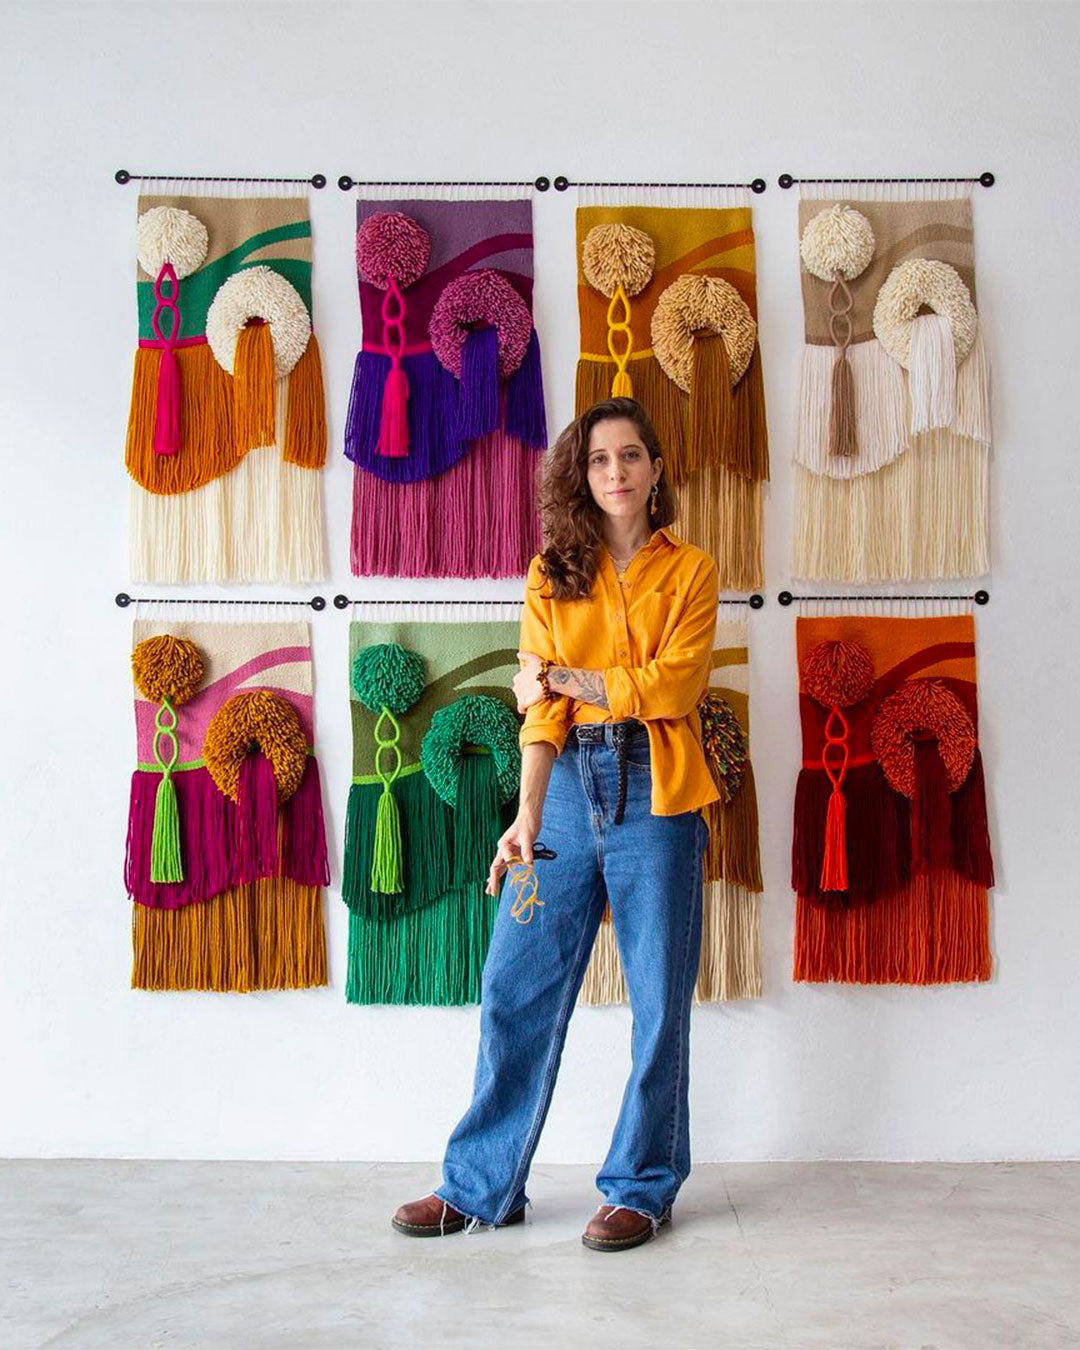 10 Textile Artist you should know - Luiza Caldari